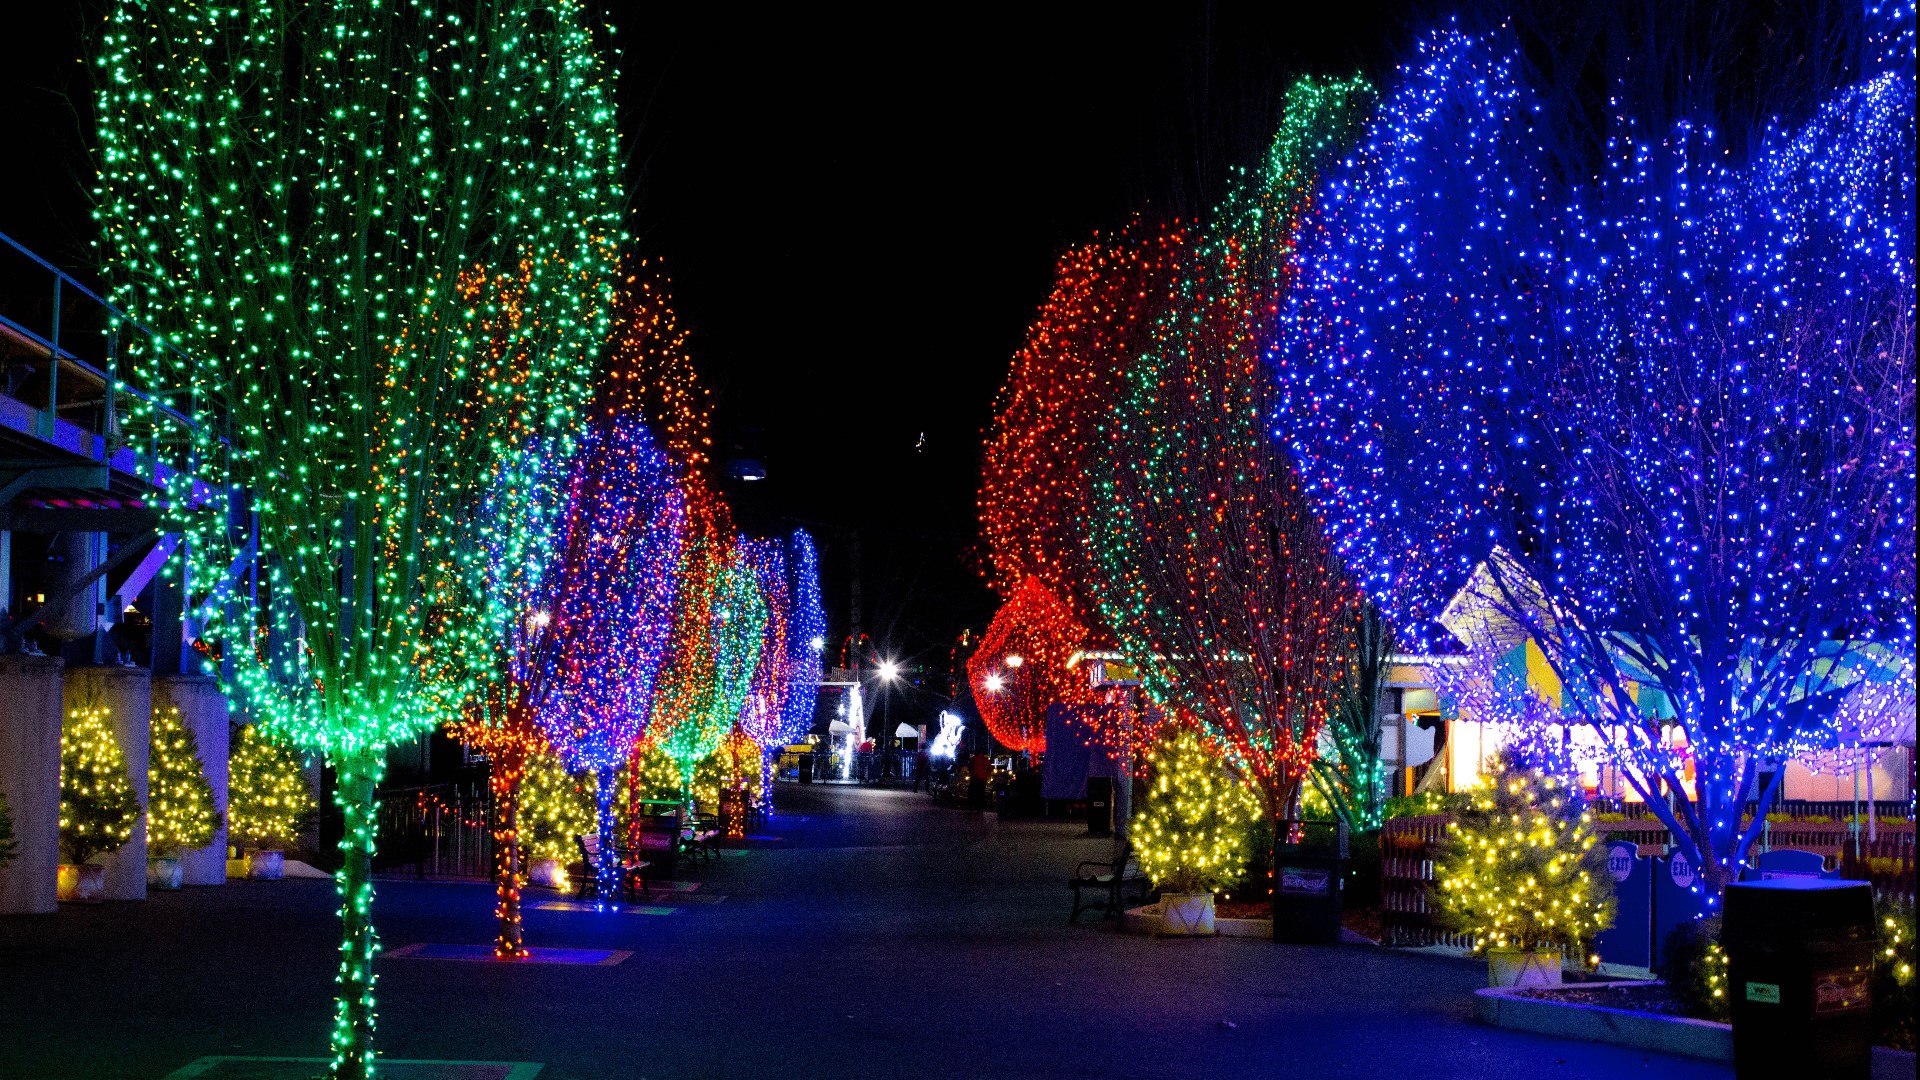 Hersheypark's Christmas Candylane runs until Jan. 1.